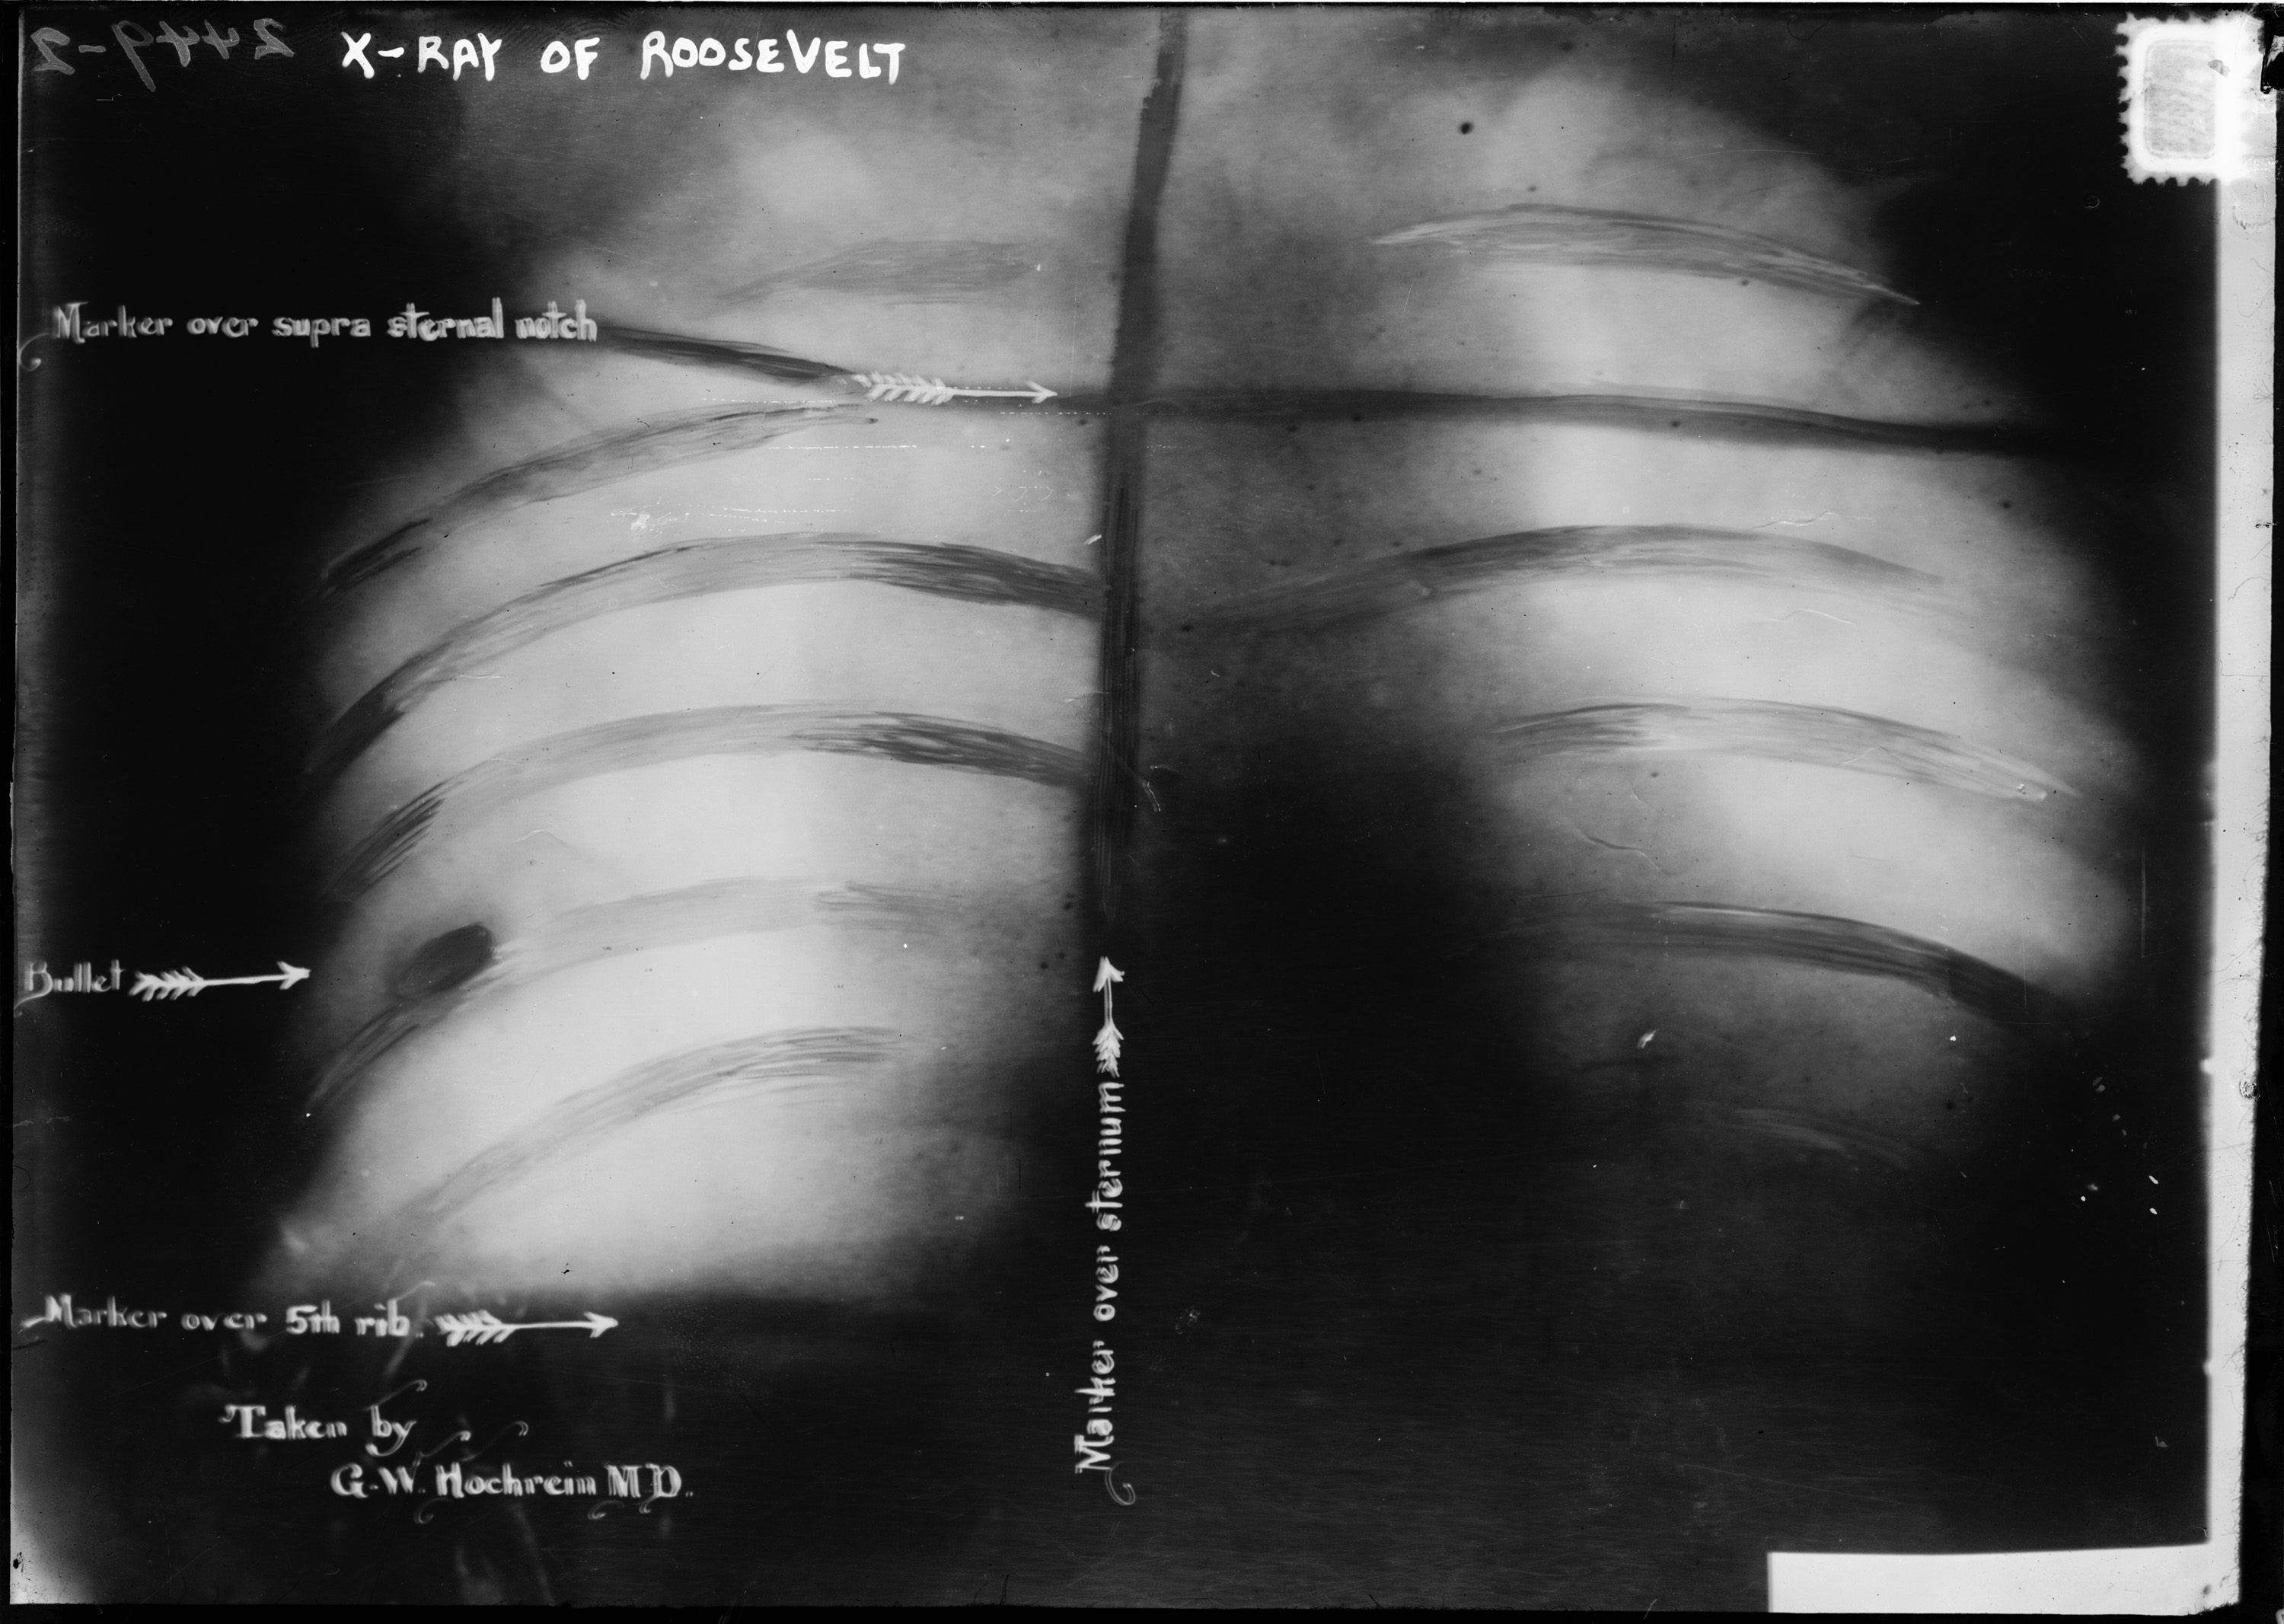 Roosevelt-X-ray.jpg